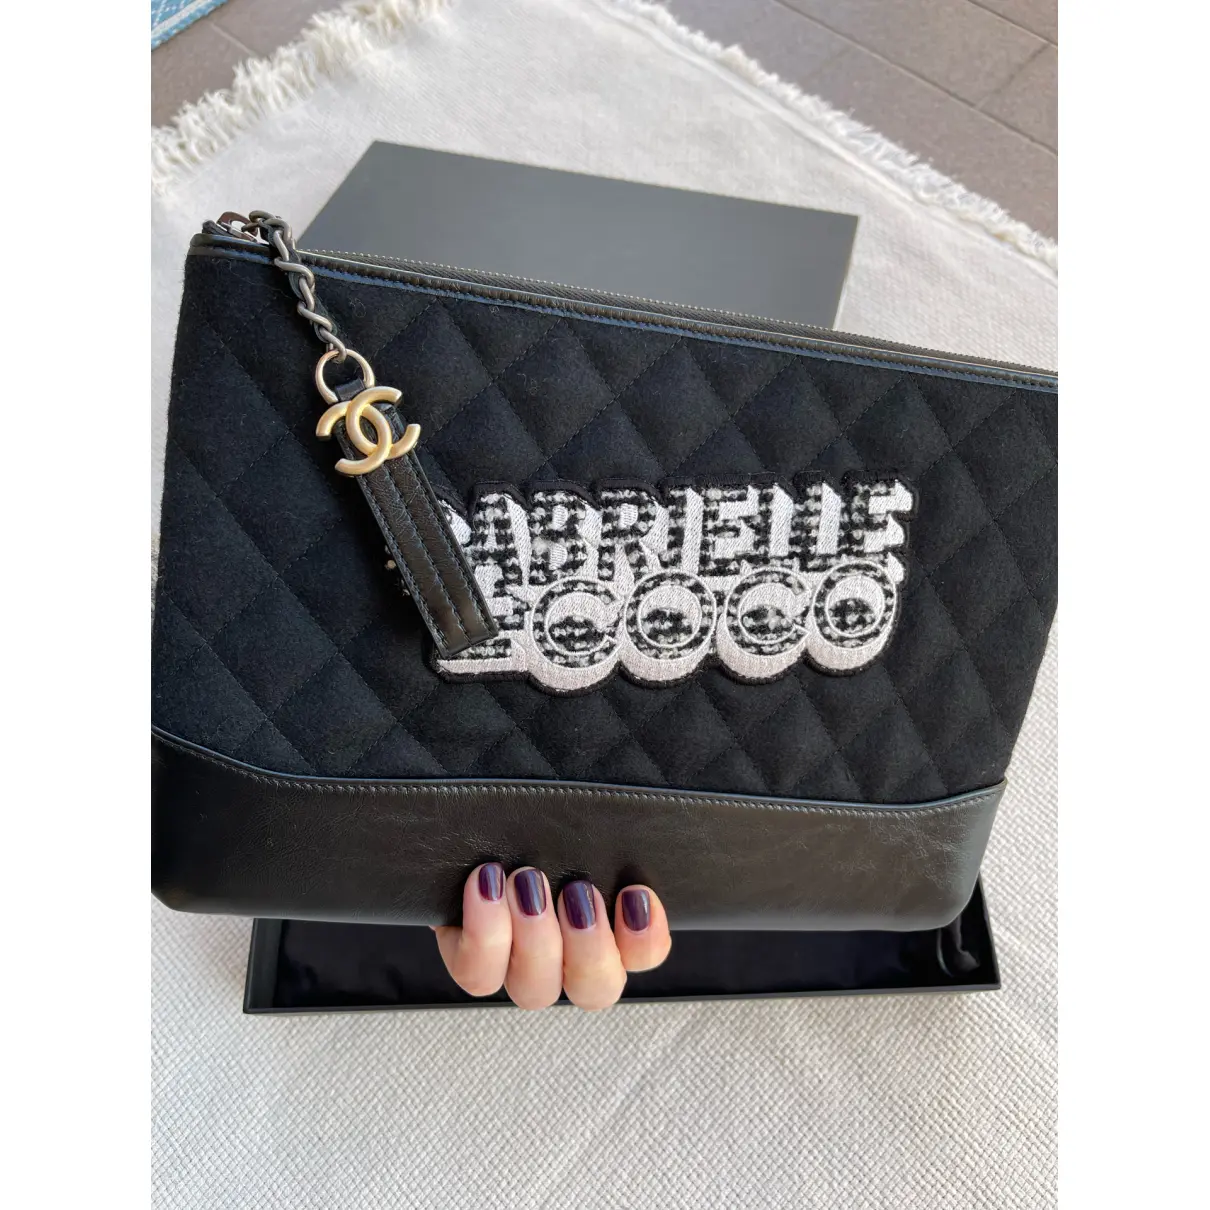 Buy Chanel Gabrielle leather clutch bag online